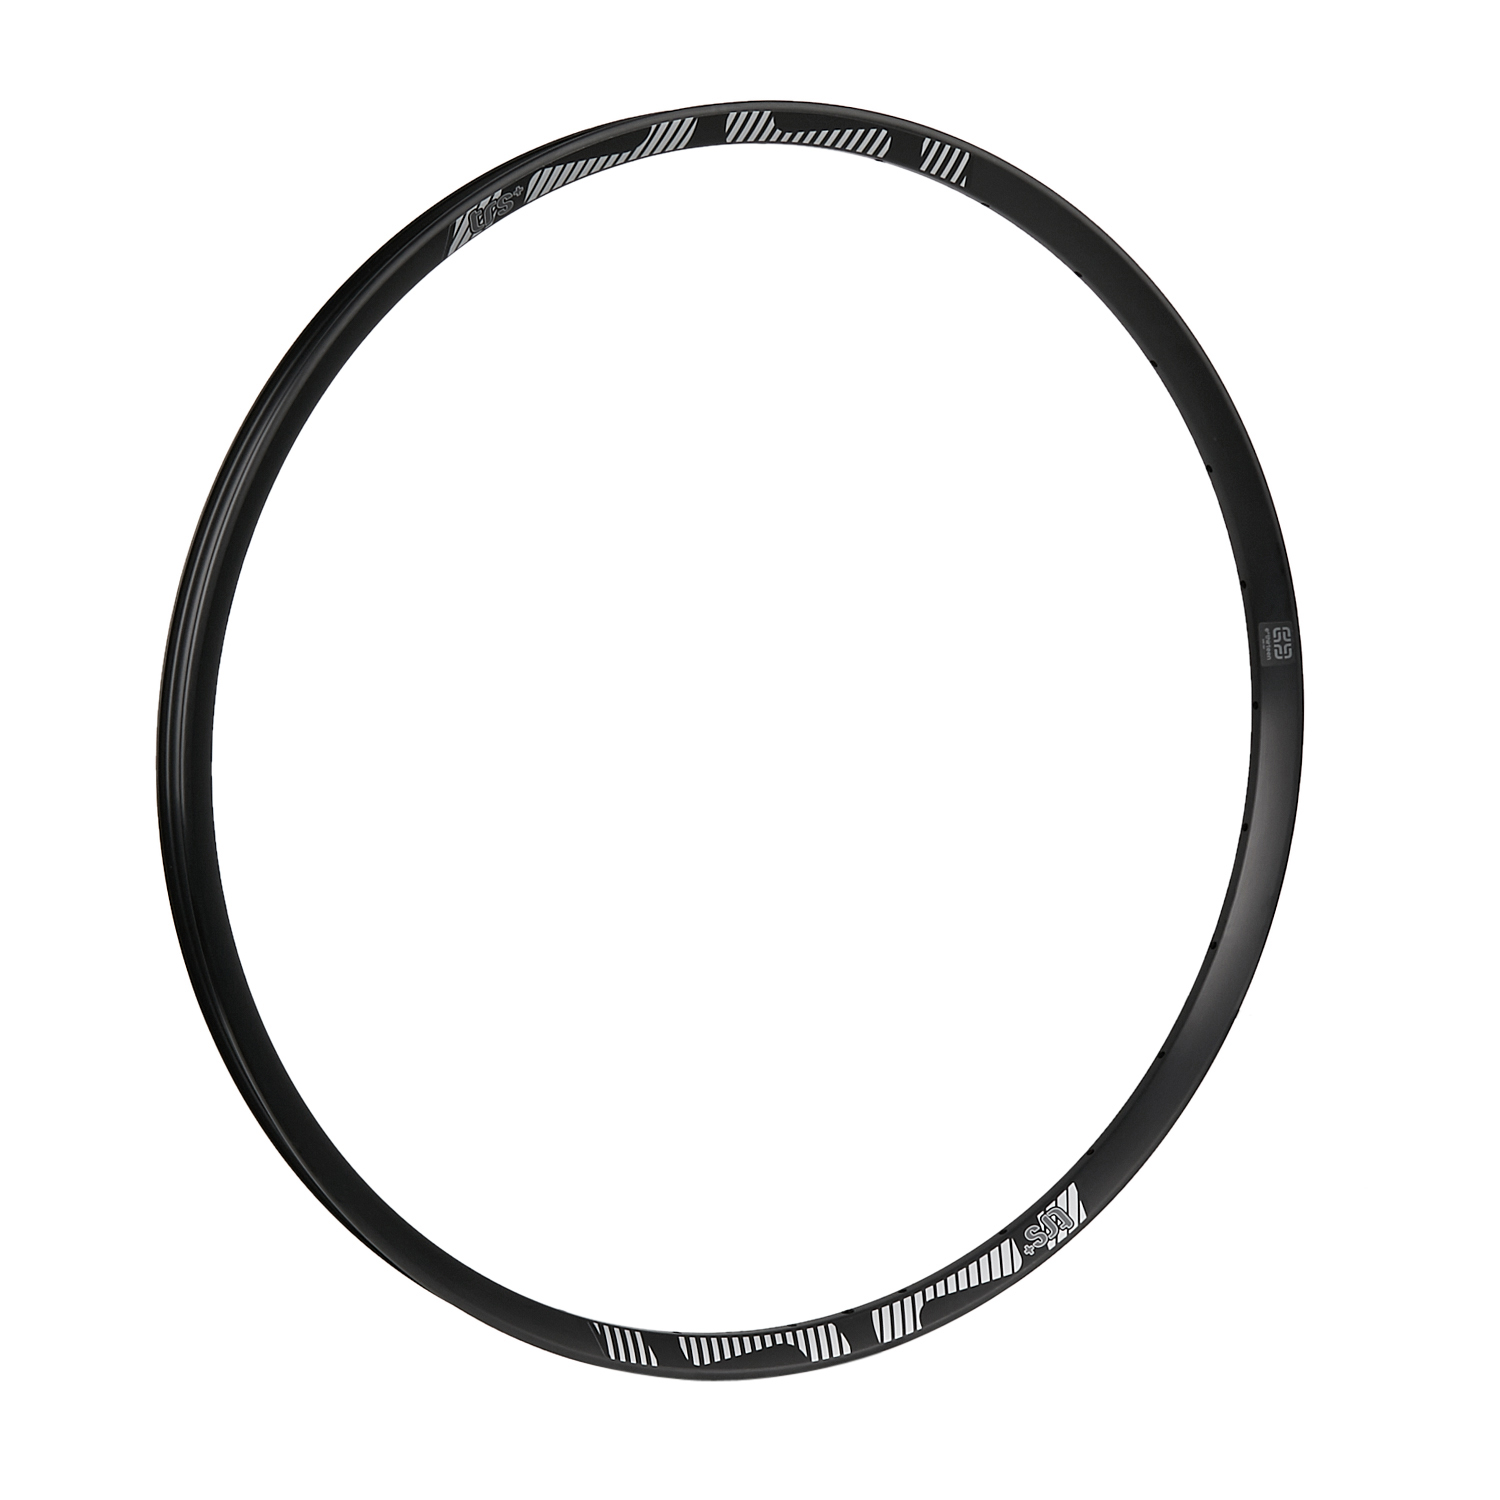 E*thirteen Cerchio MTB TRS+ Black, 27.5 Inches x 28 mm